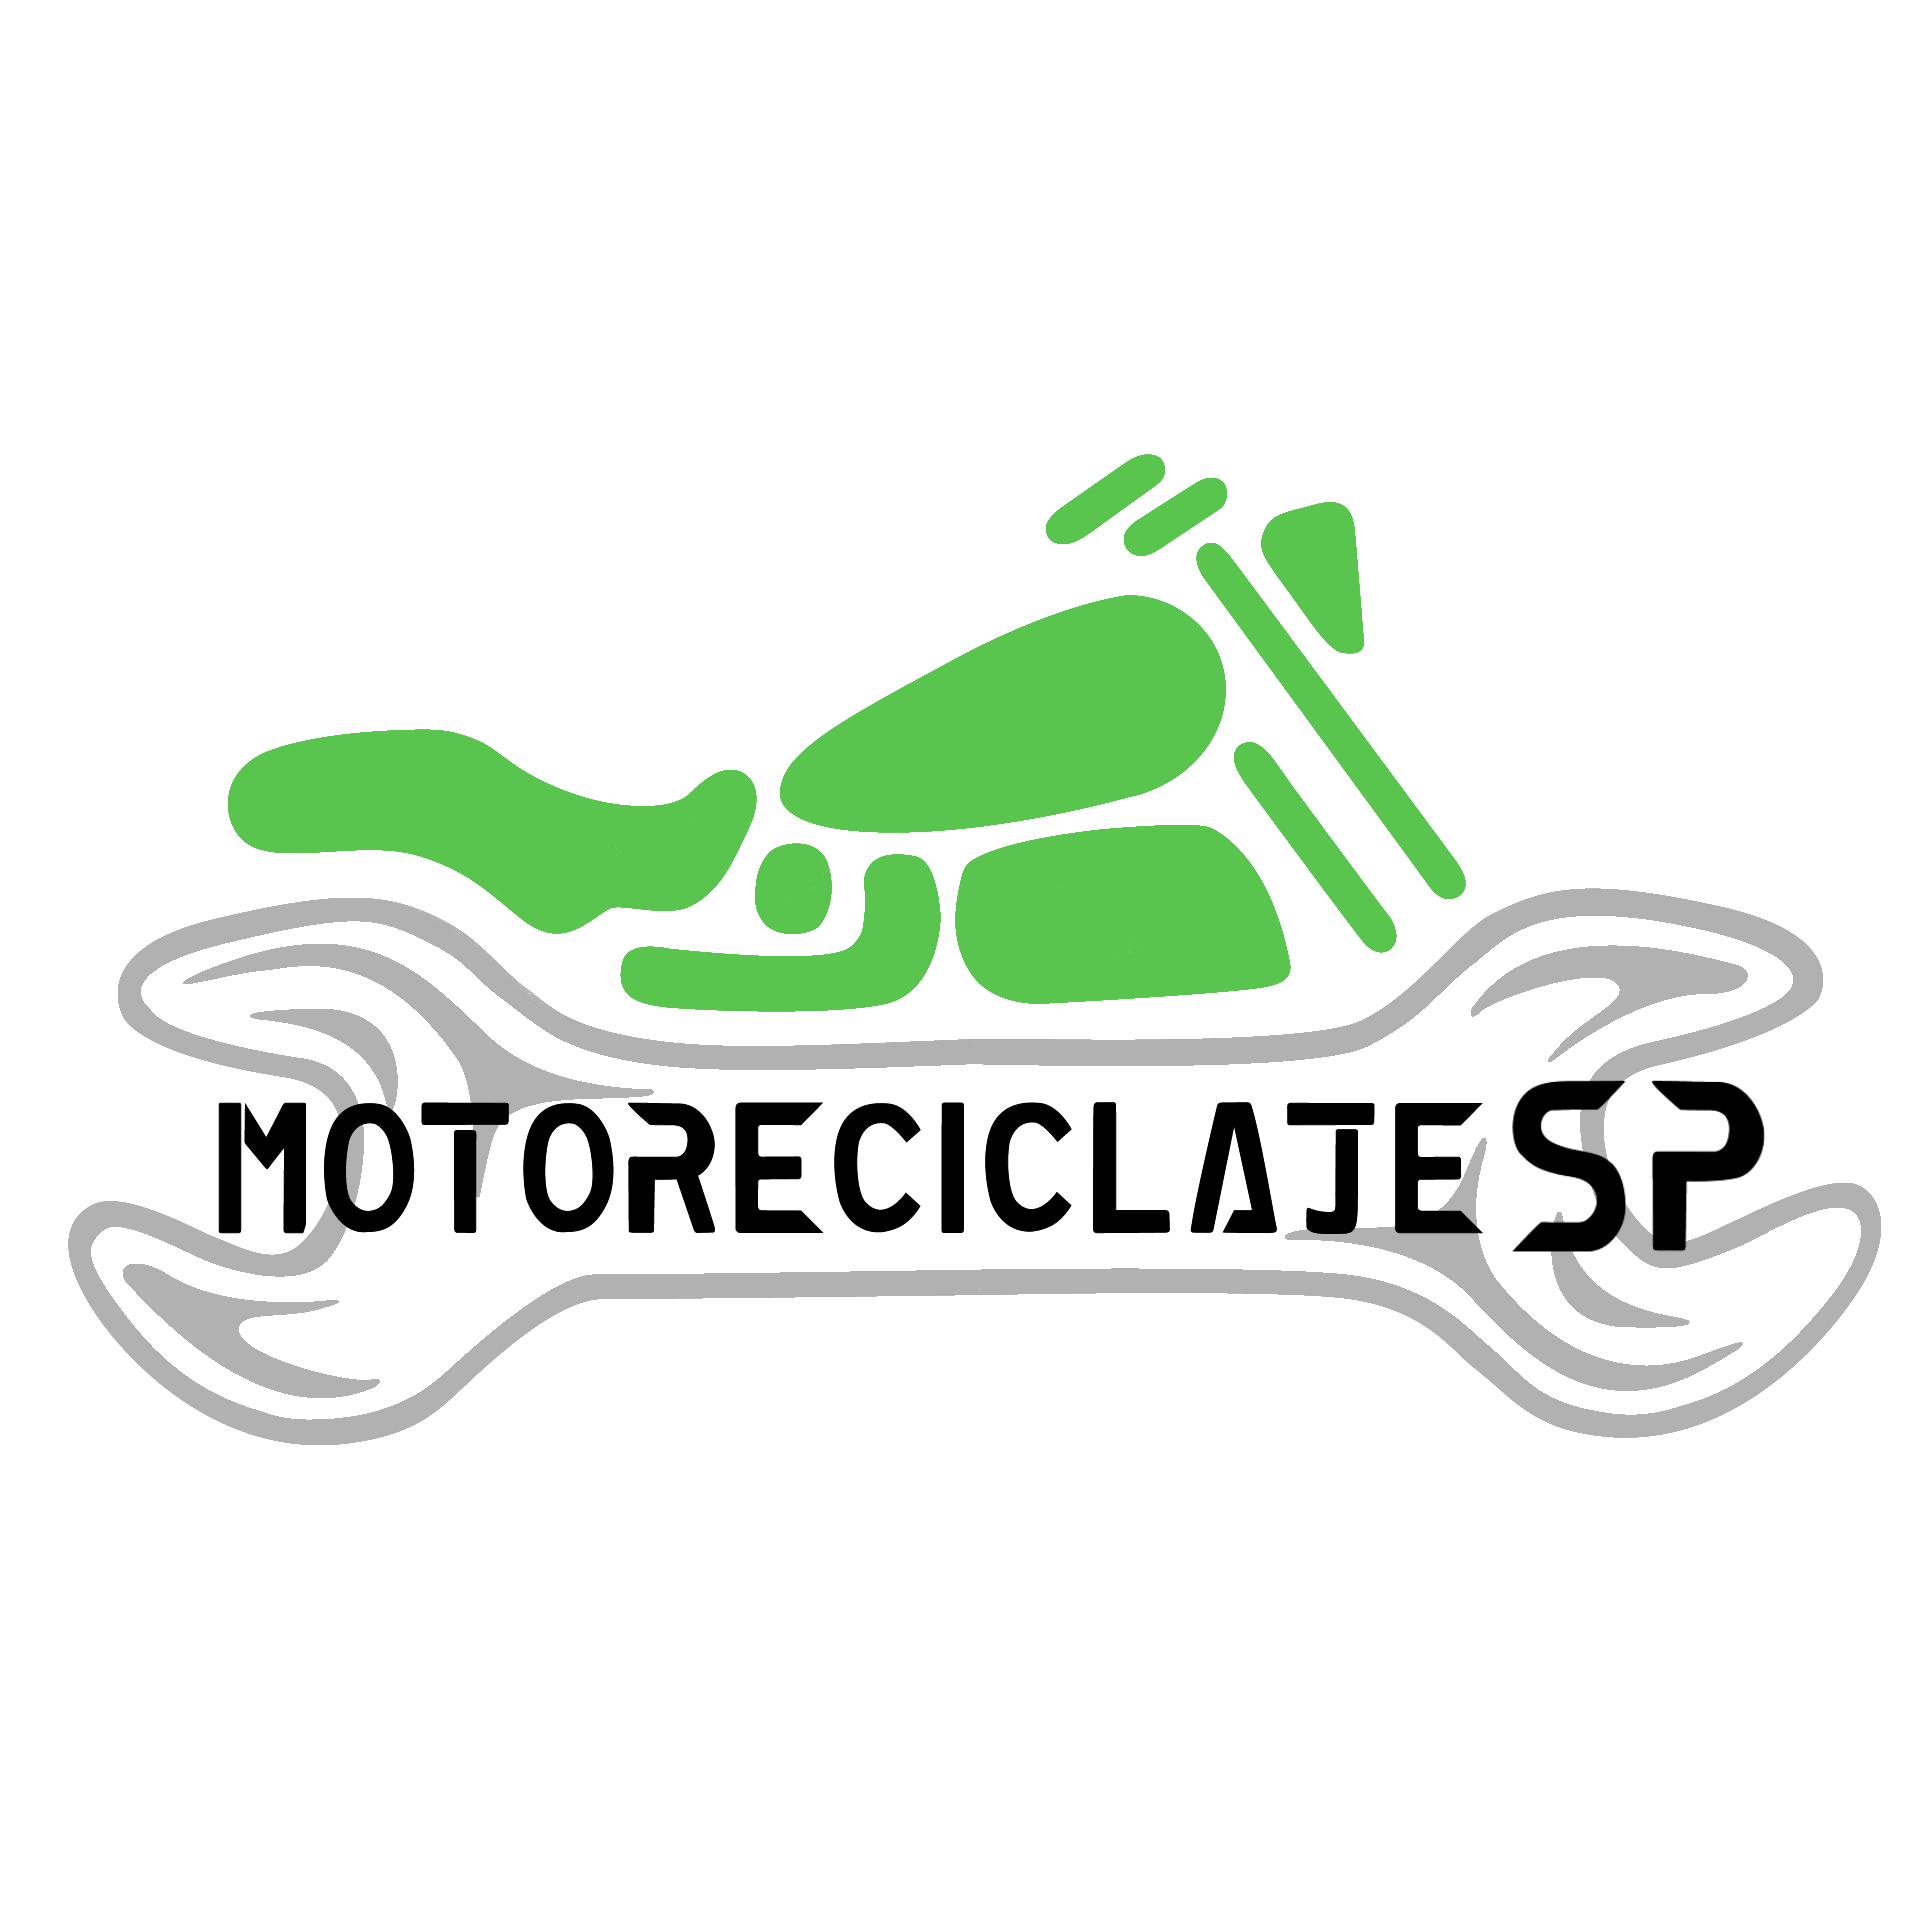 MotoreciclajeSP Logo